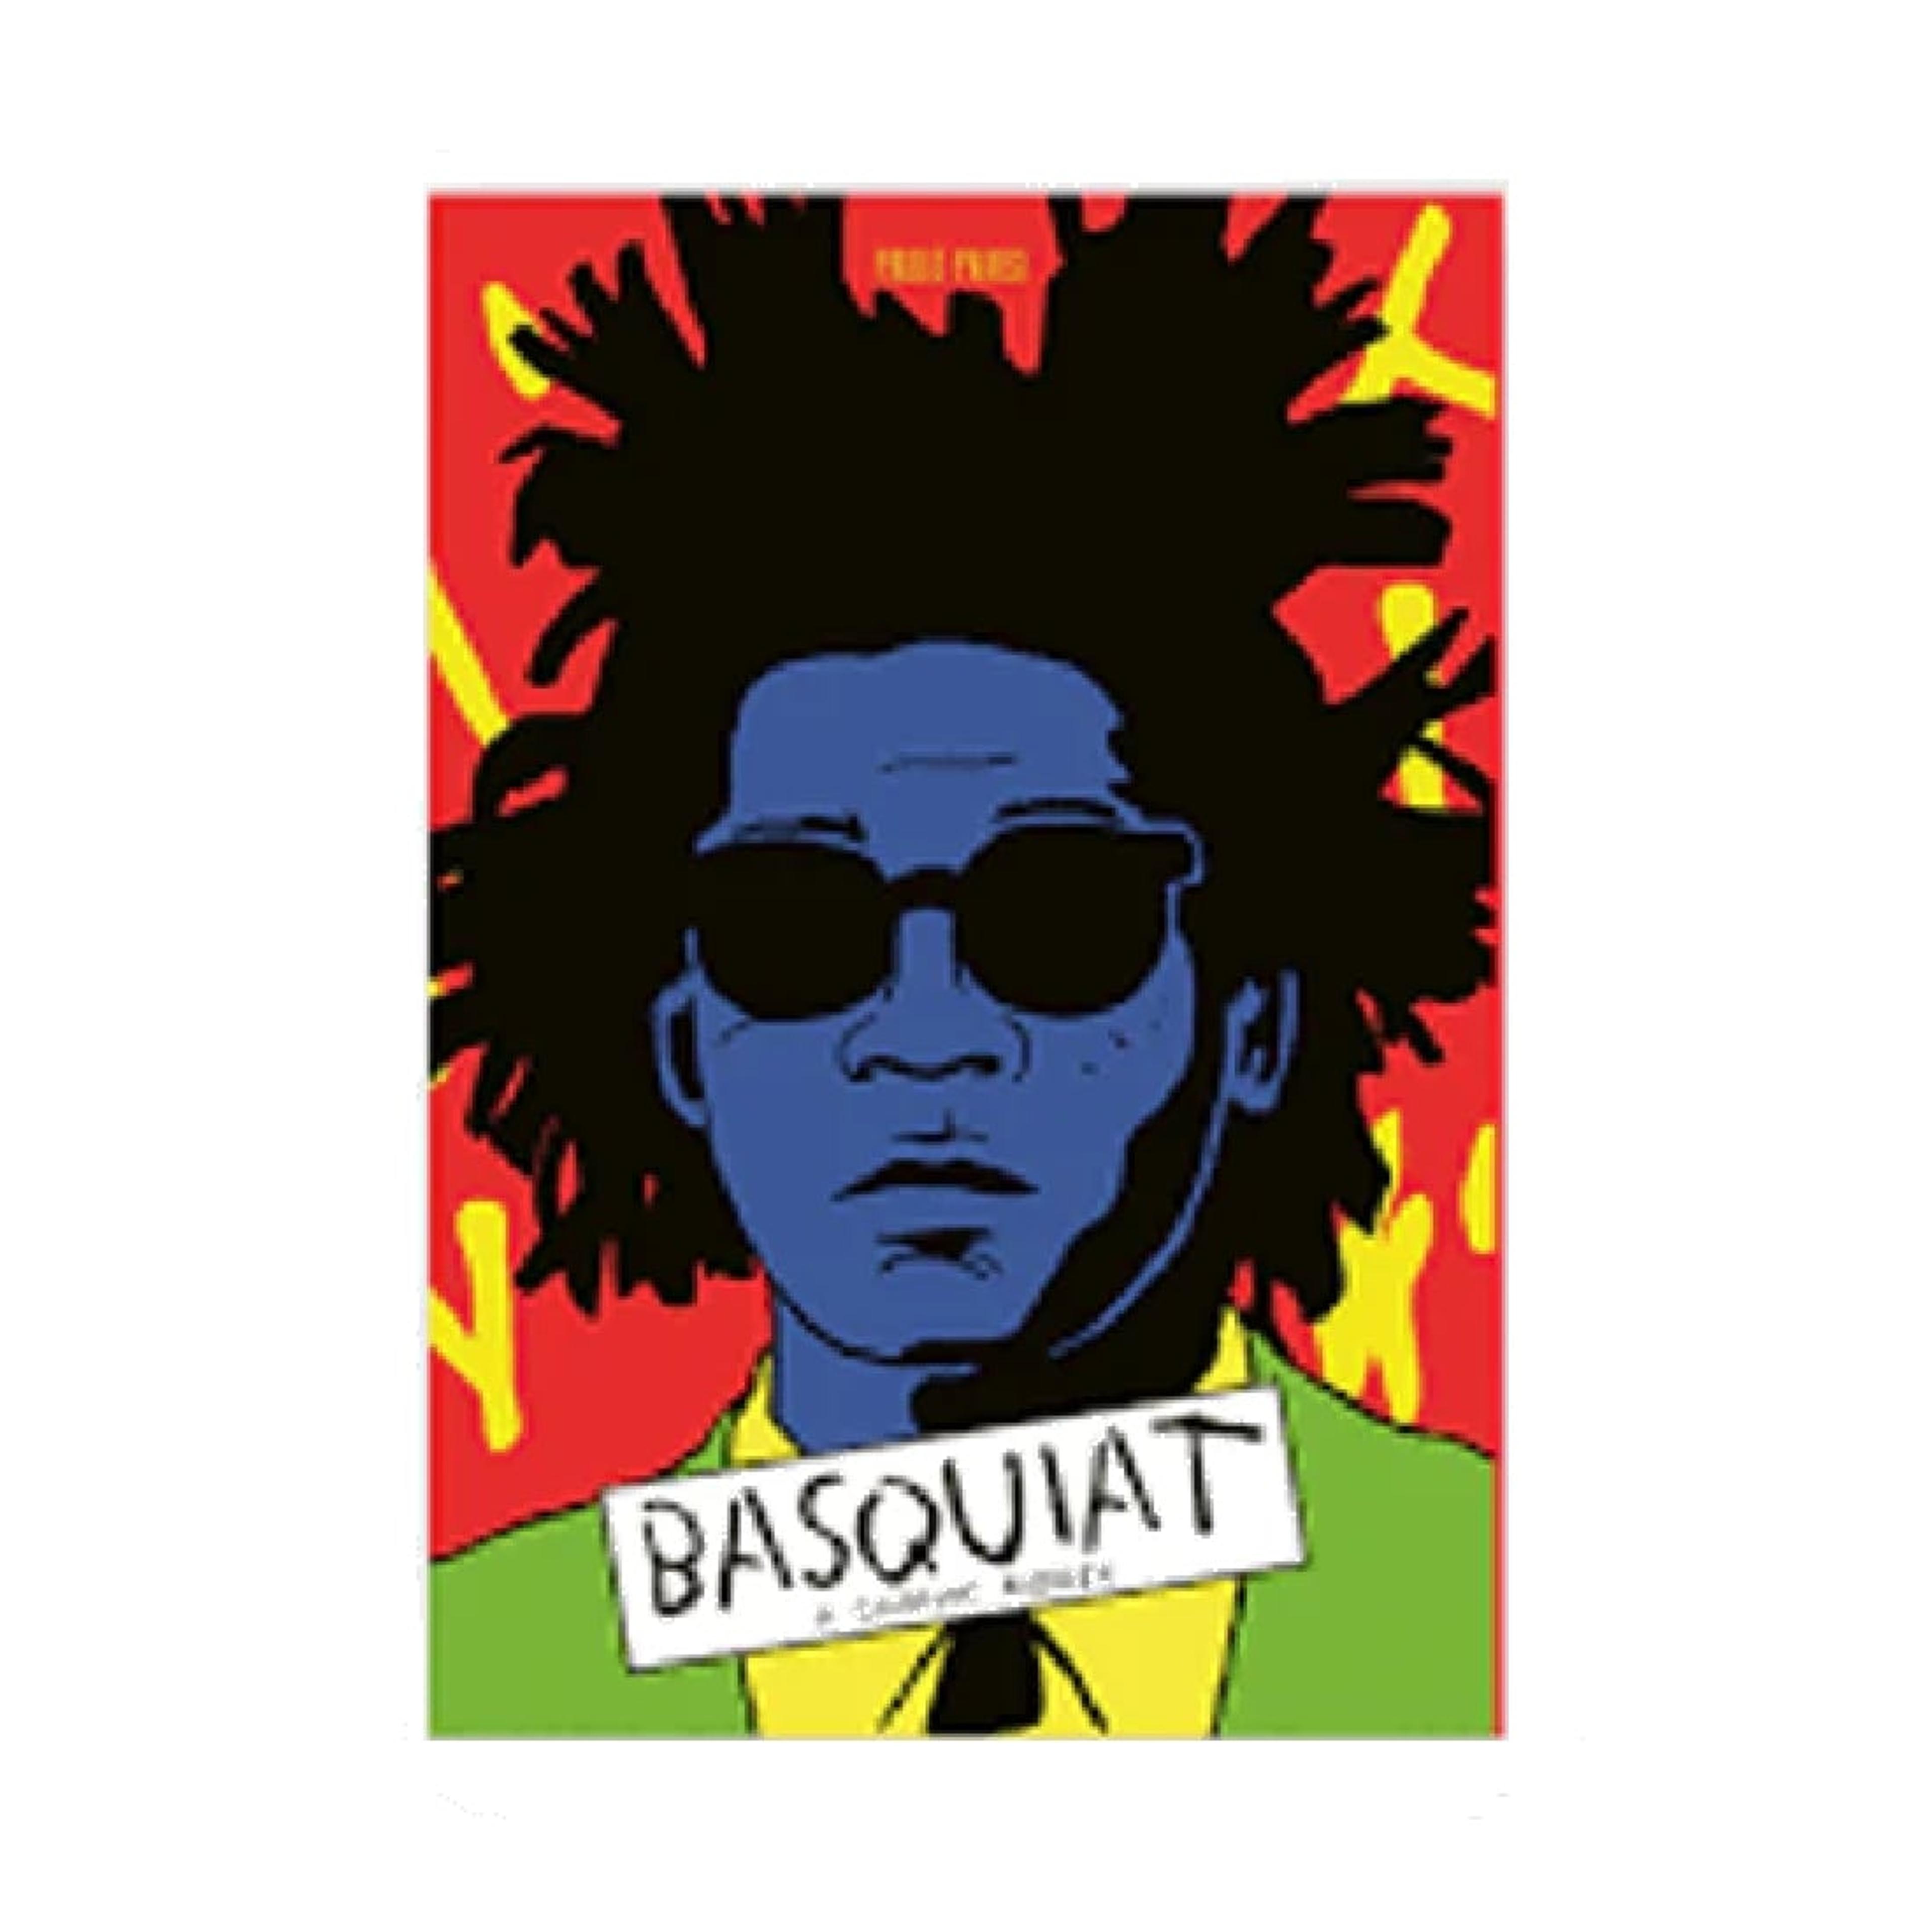 Basquiat - A Graphic Novel